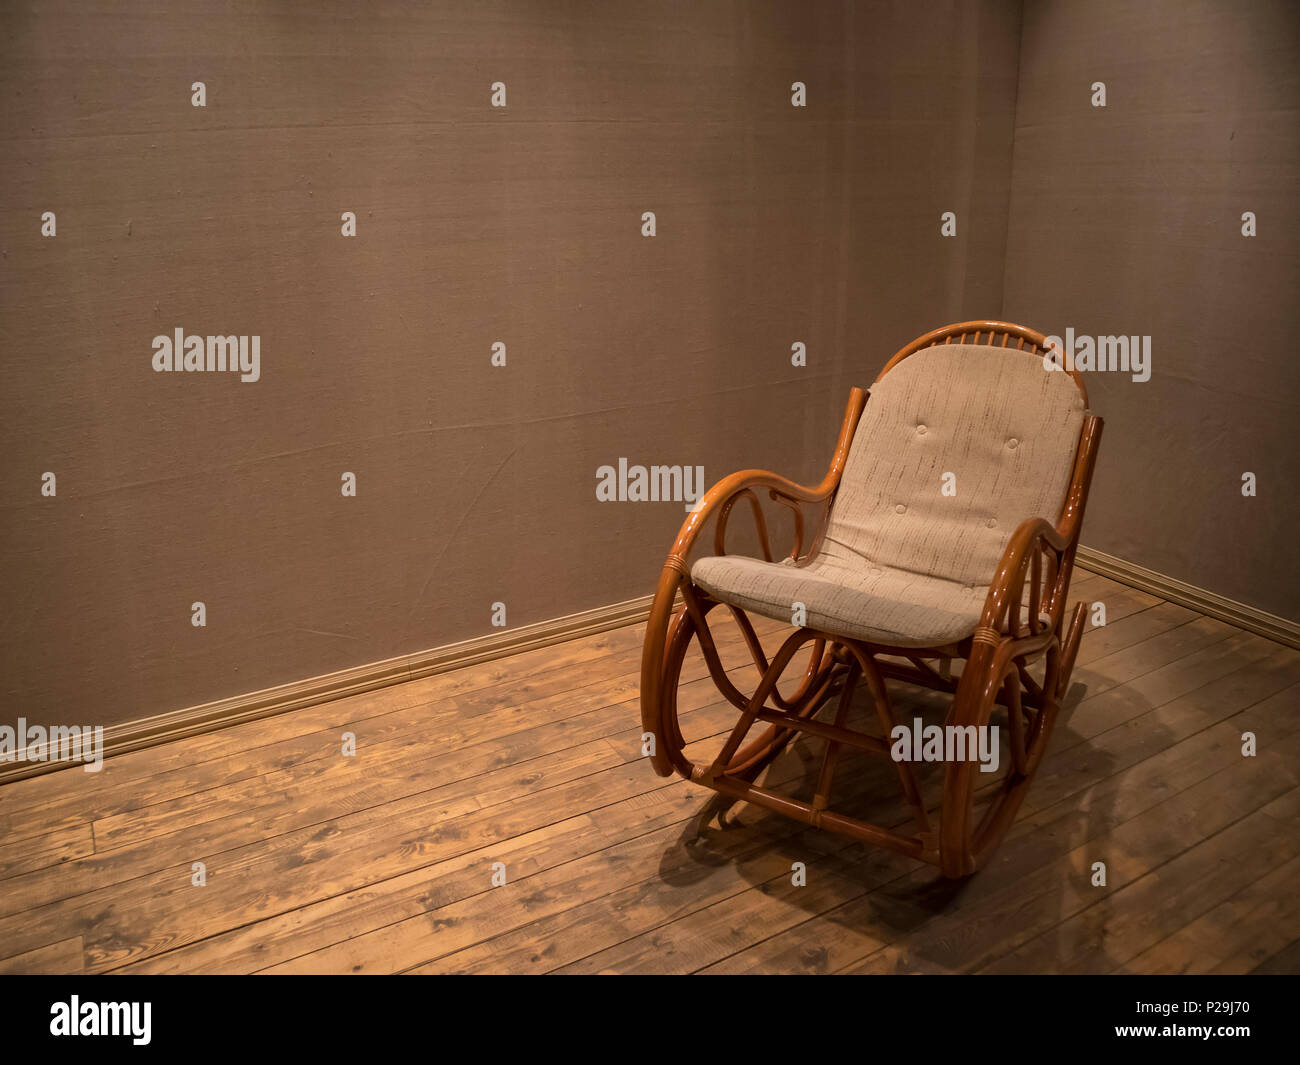 Wicker rocking chair in empty room with wooden floor, concept indoor composition Stock Photo